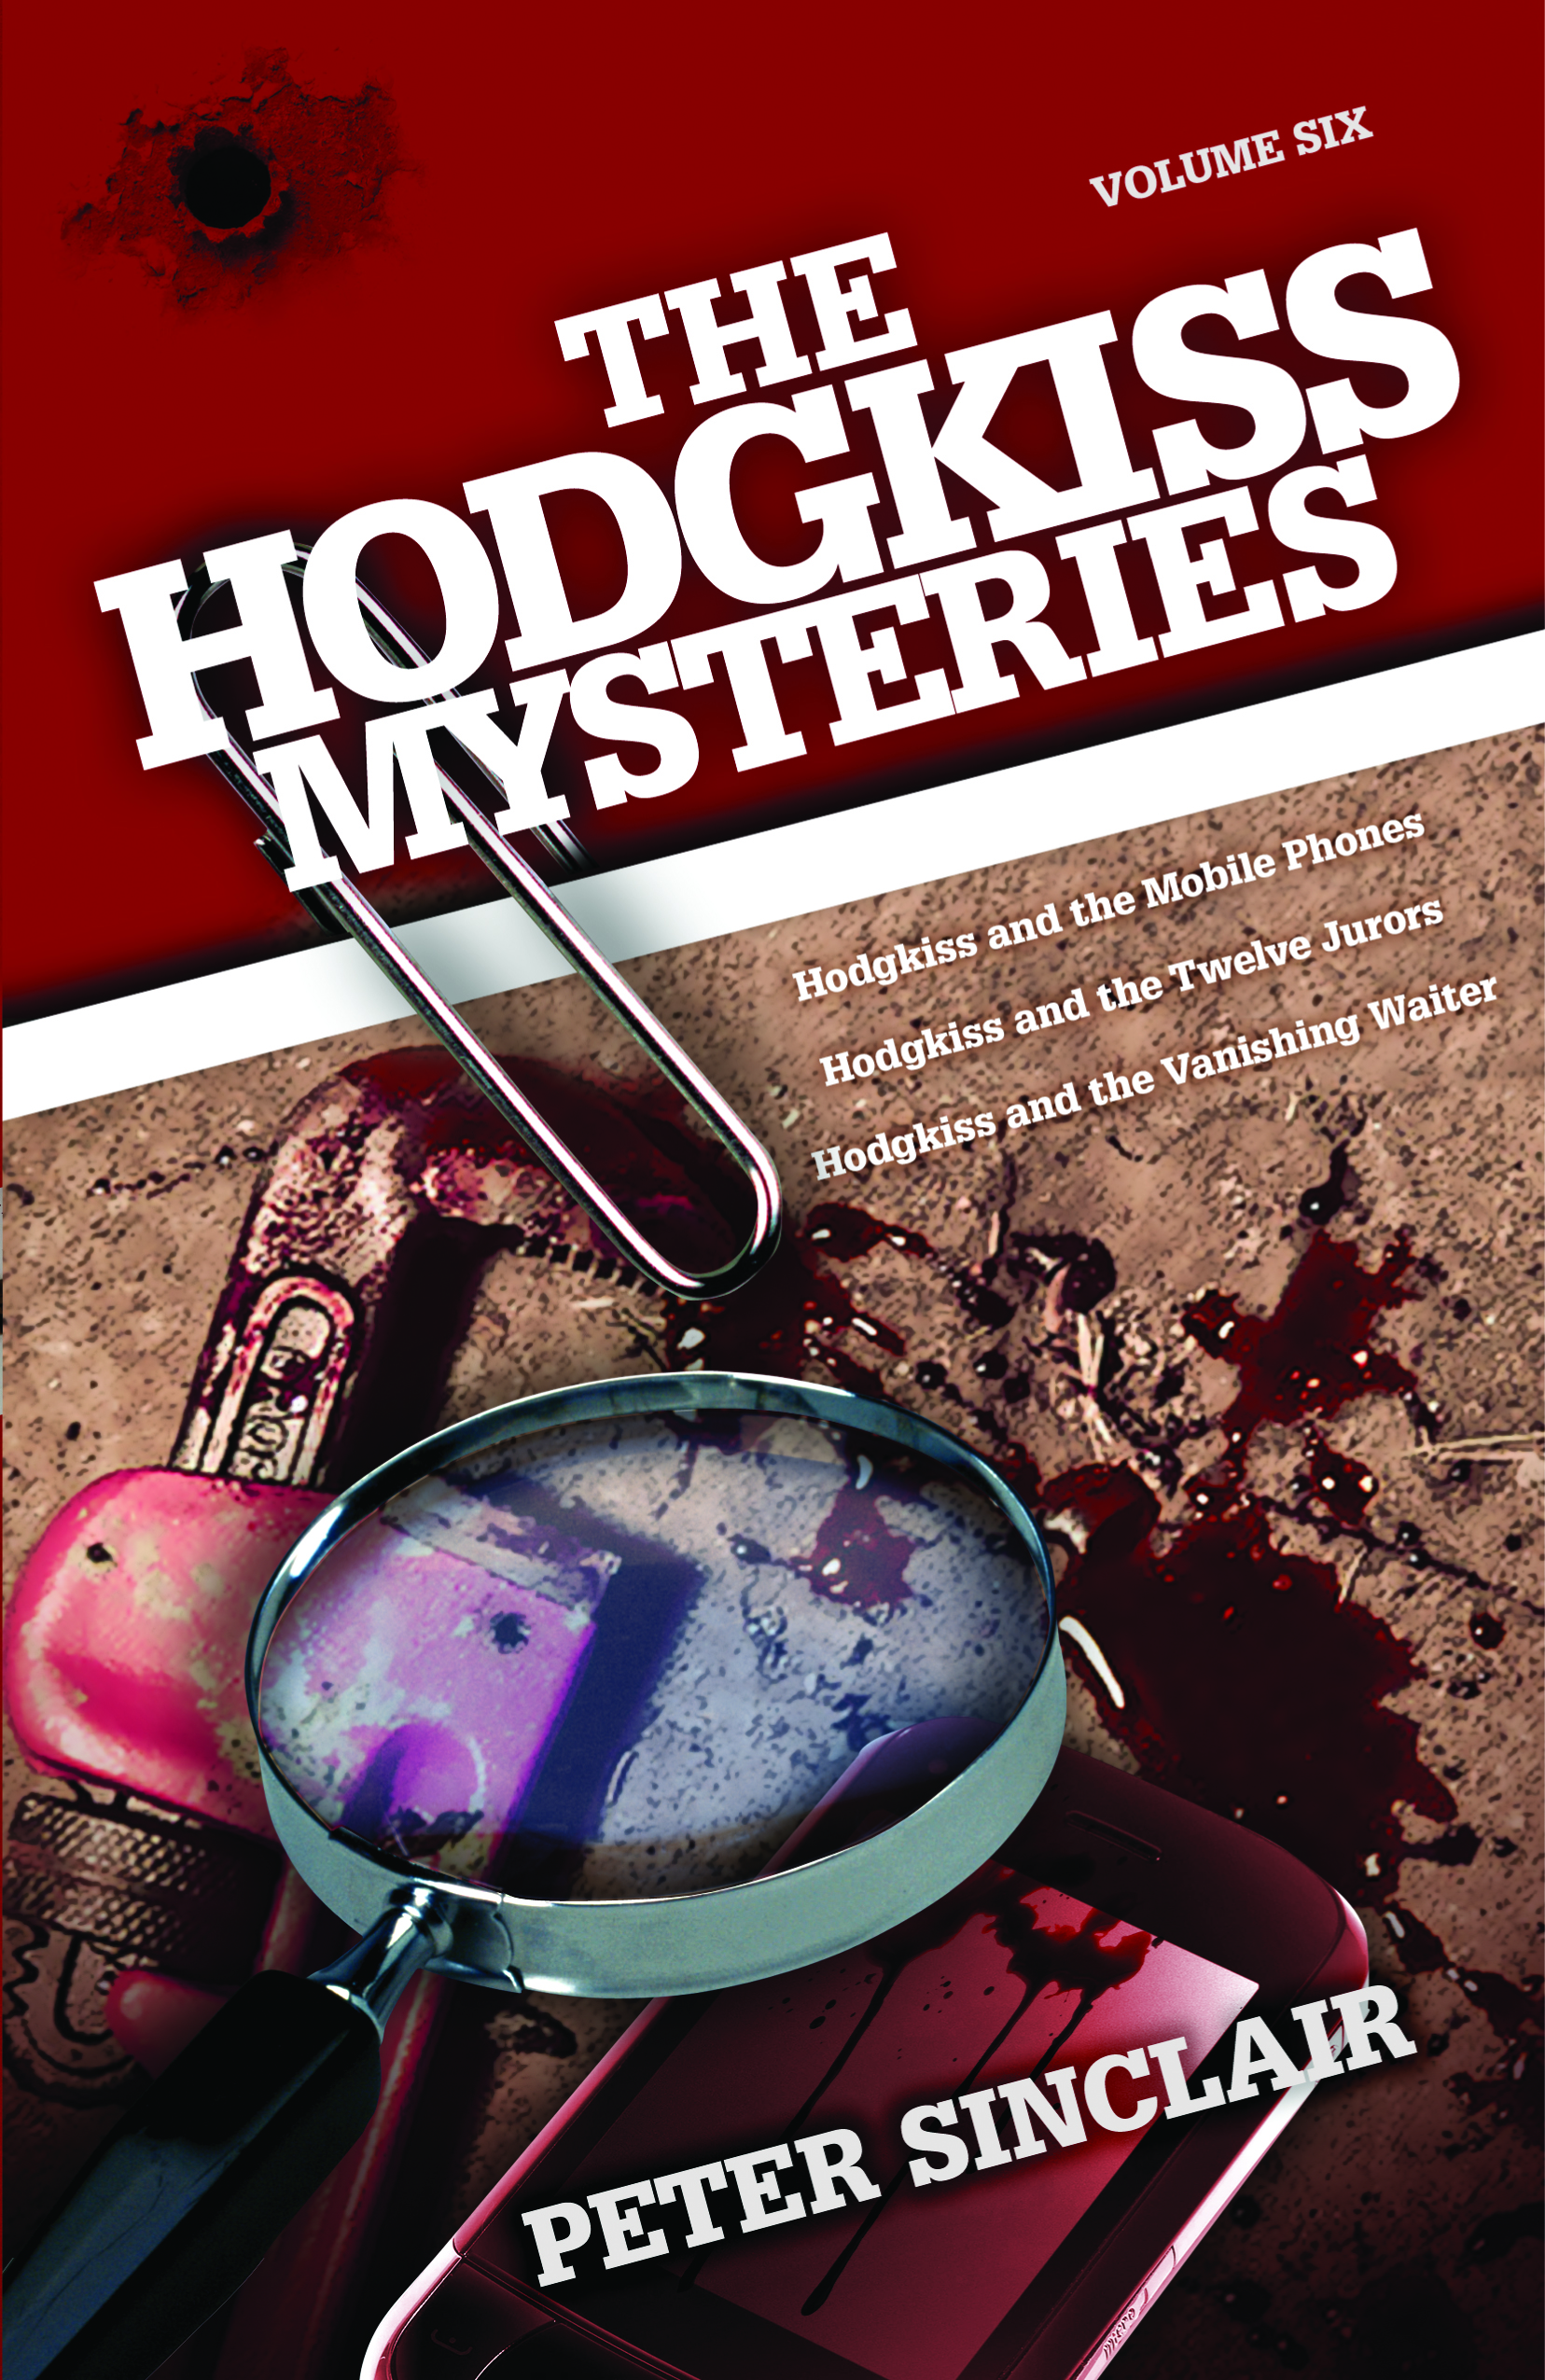 Hodgkiss Mysteries_cover_VOL VI.jpg